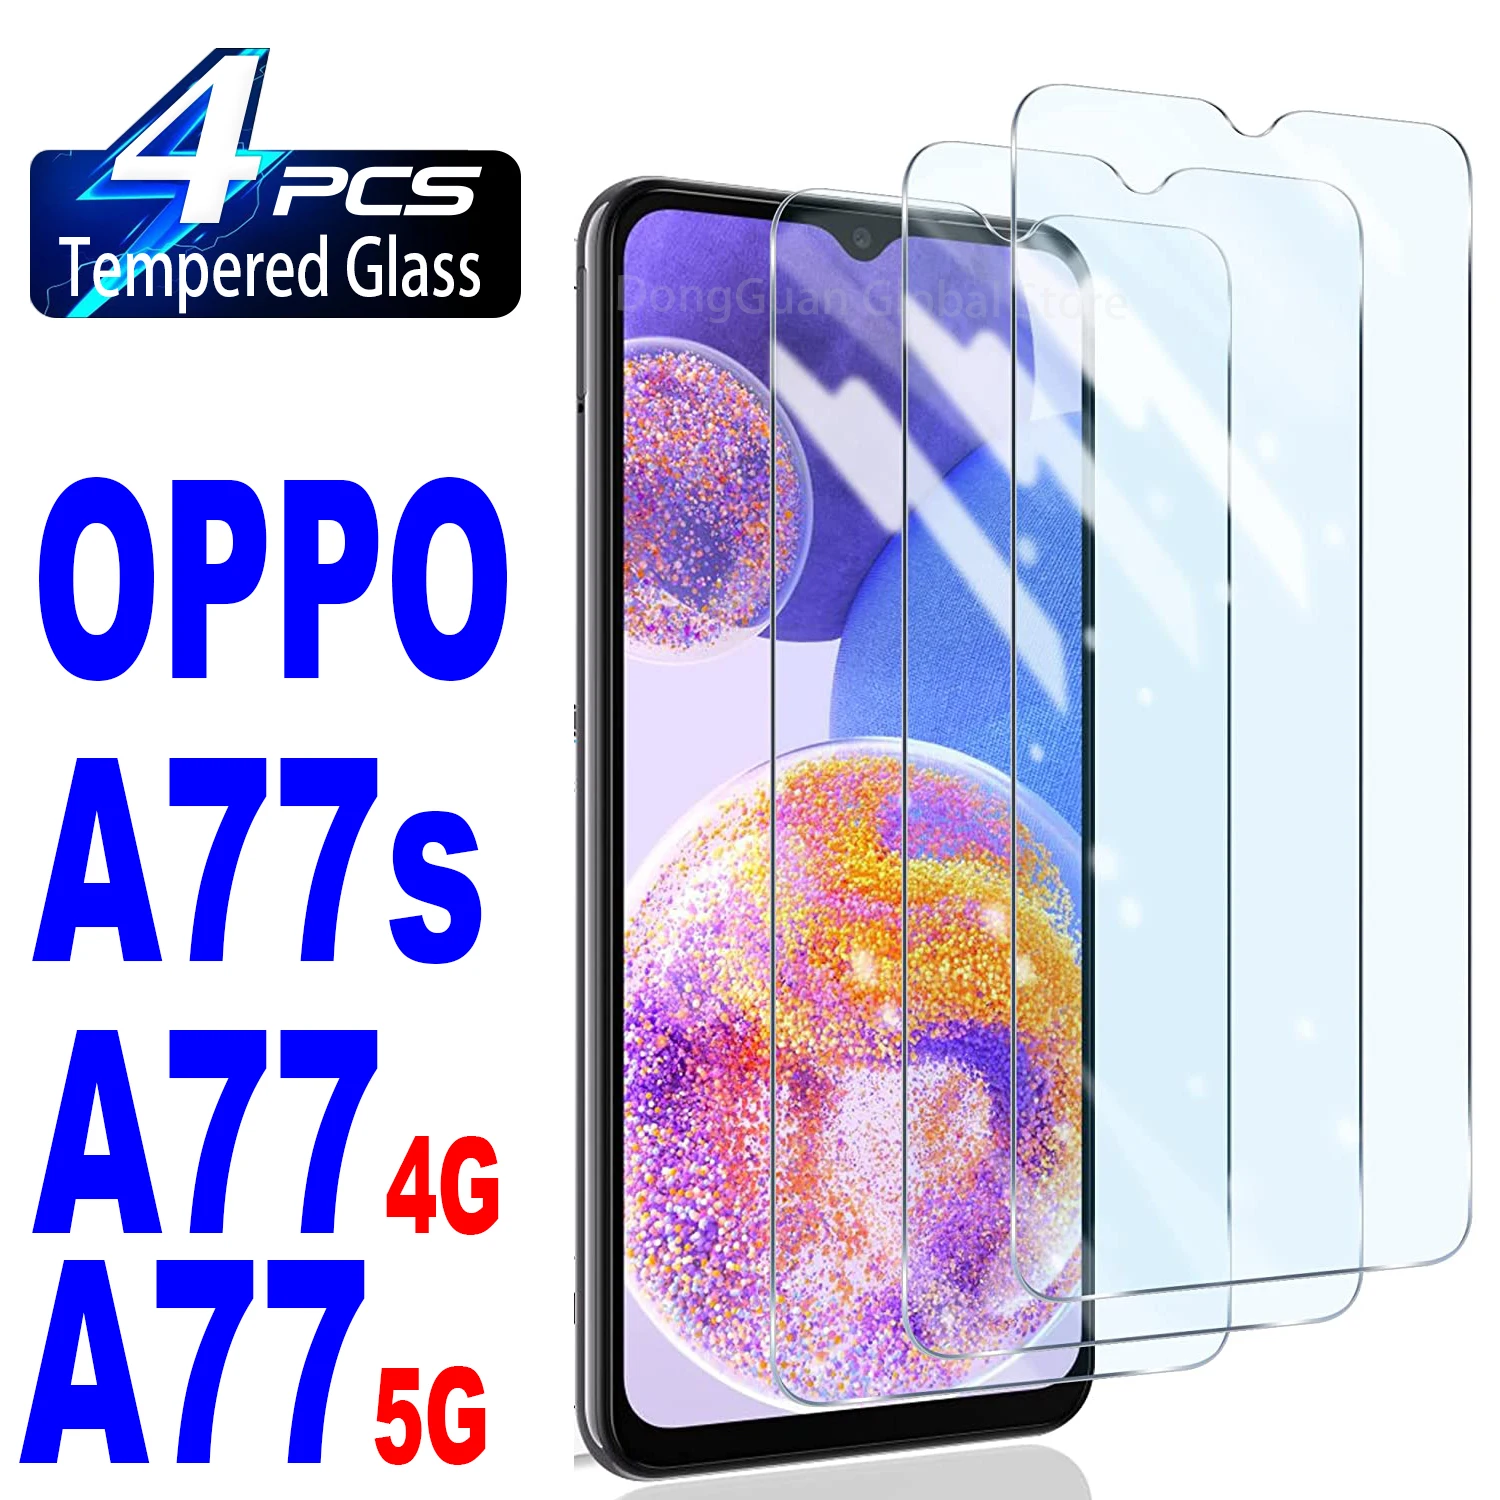 Oppo-強化ガラススクリーンプロテクター,a77,4g,5g,a77s,2個,4個